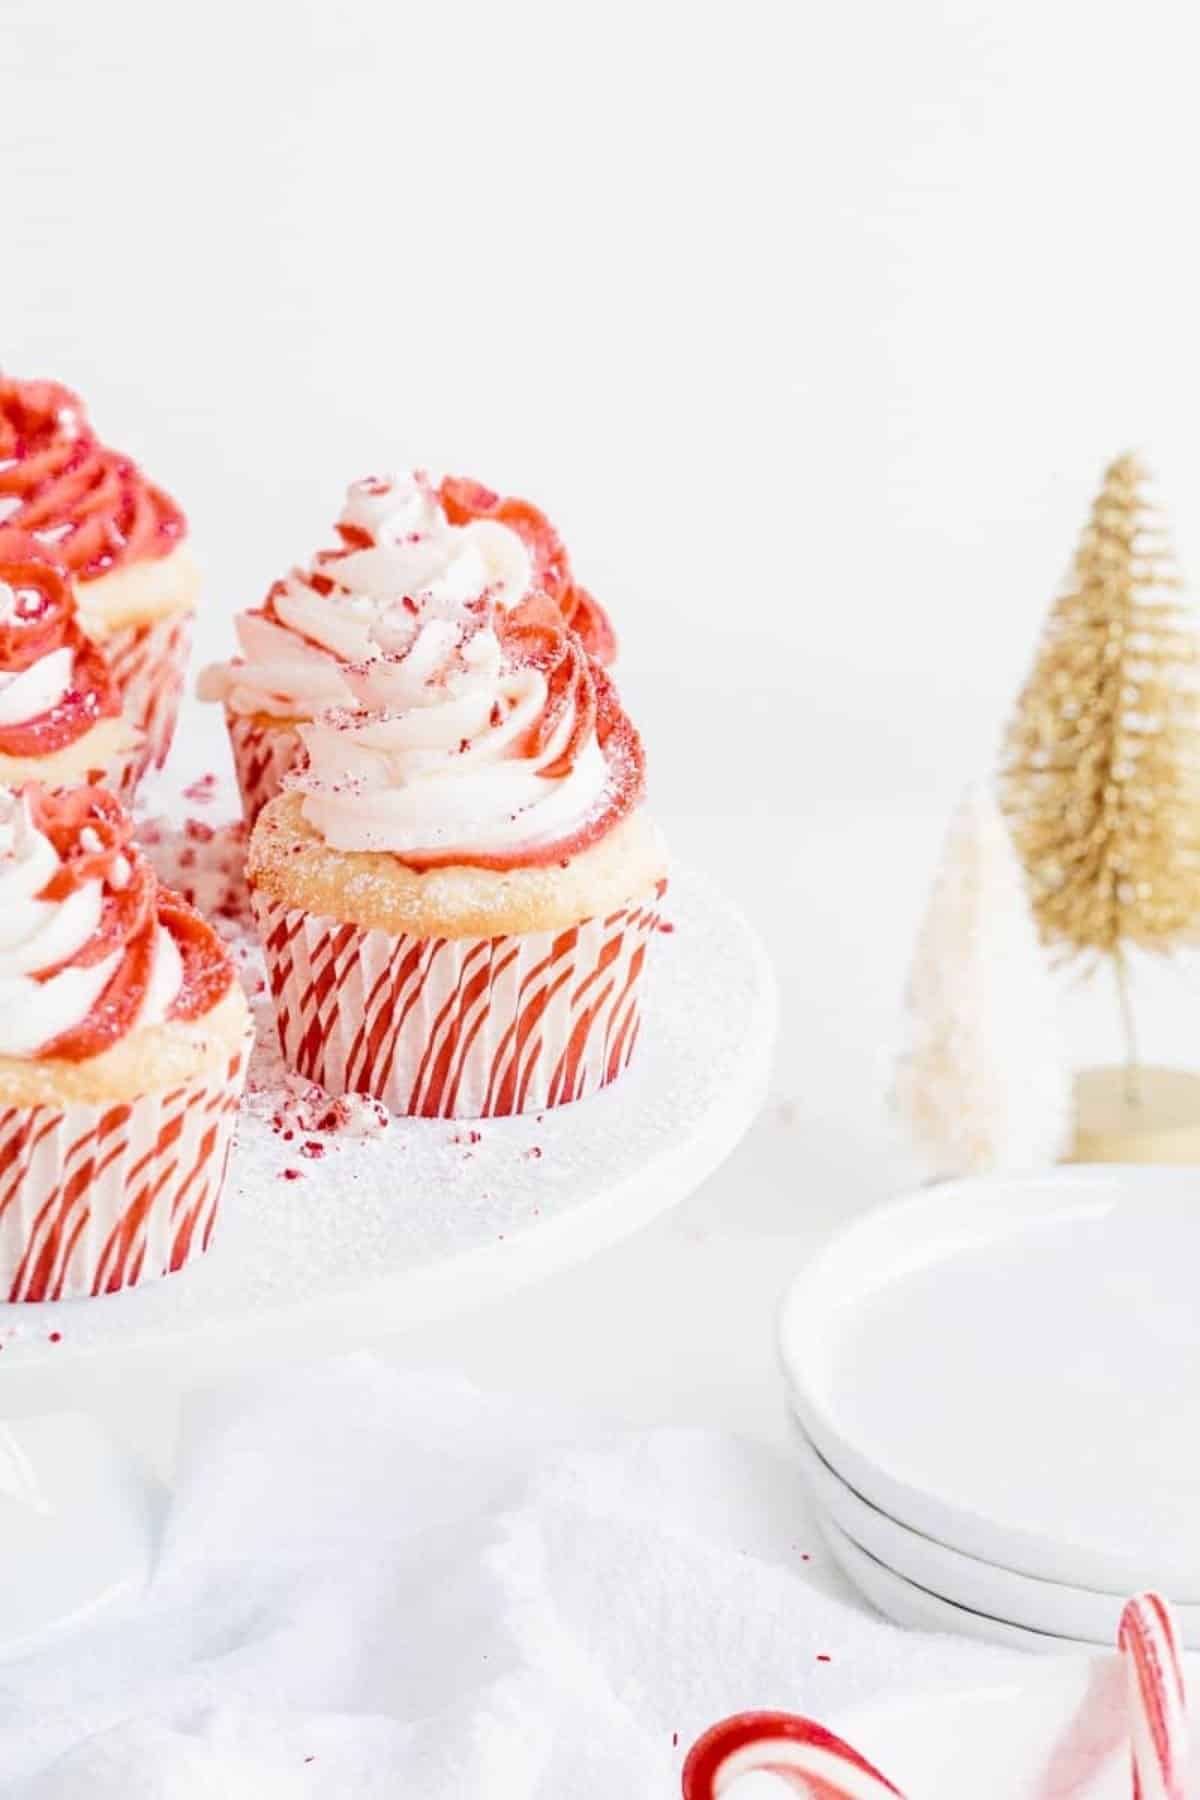 cupcakes on cake stand and Christmas tree